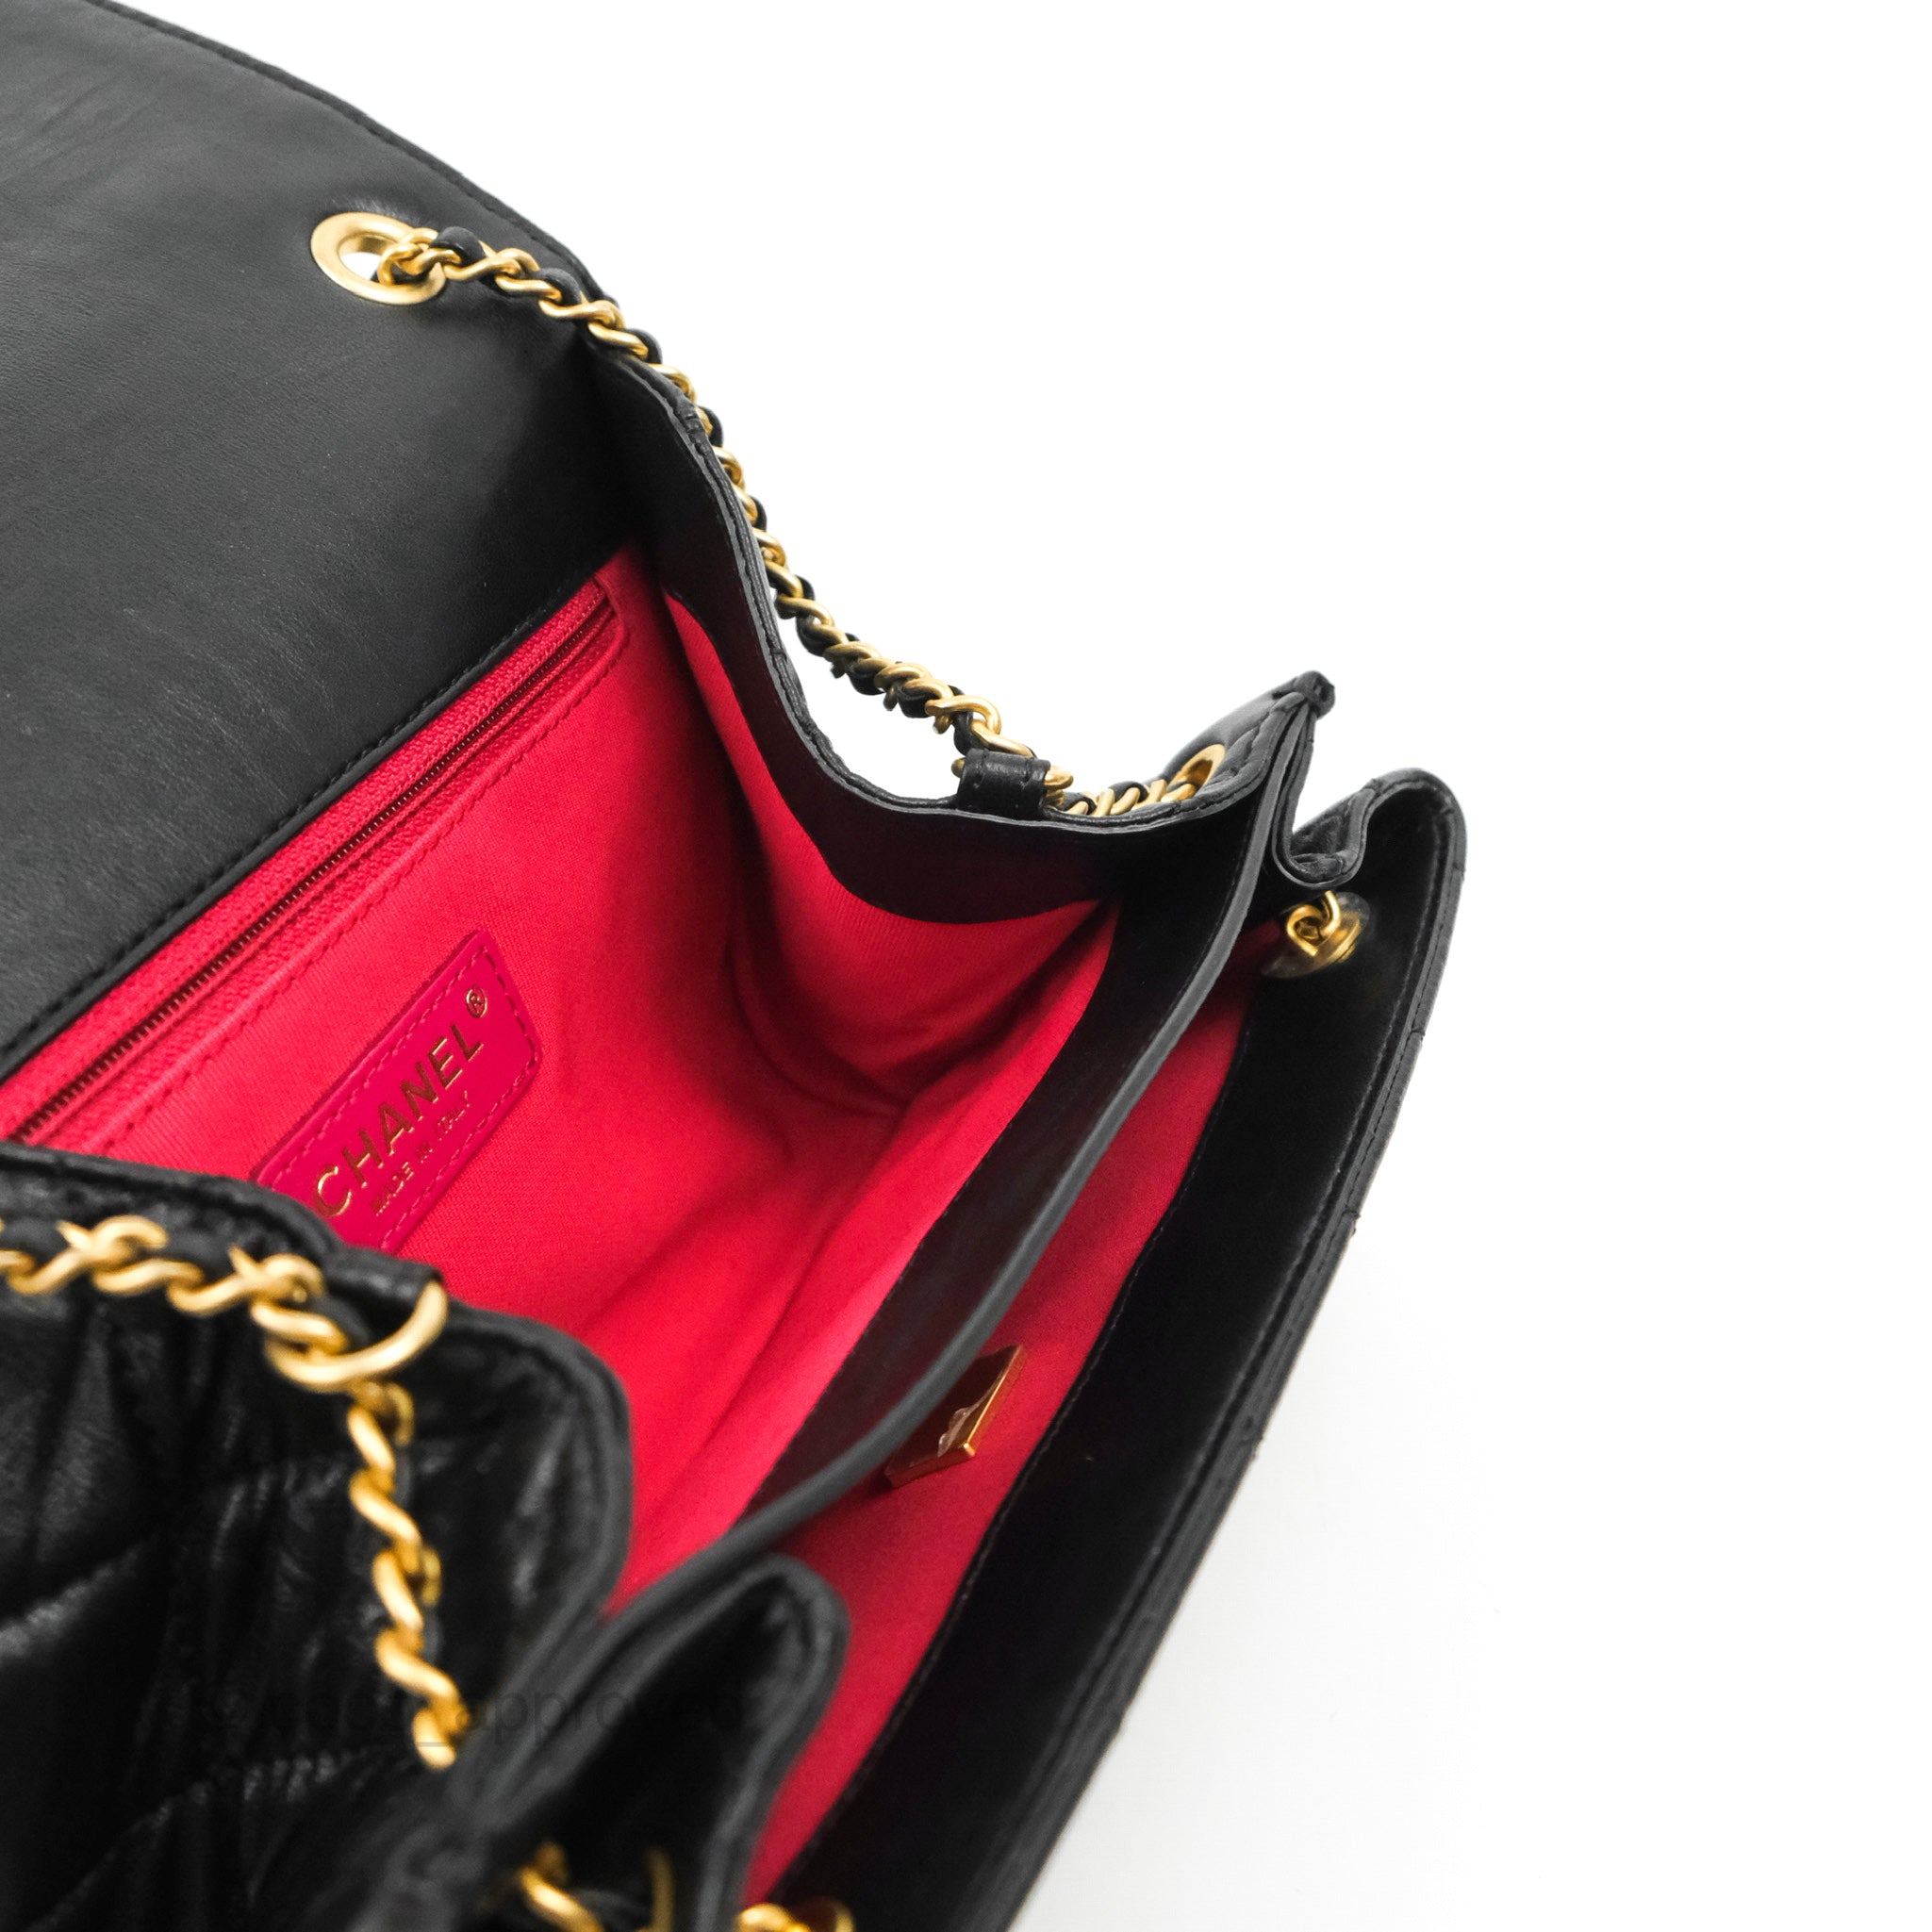 Chanel Flap Bag Black Lambskin Aged Gold Hardware